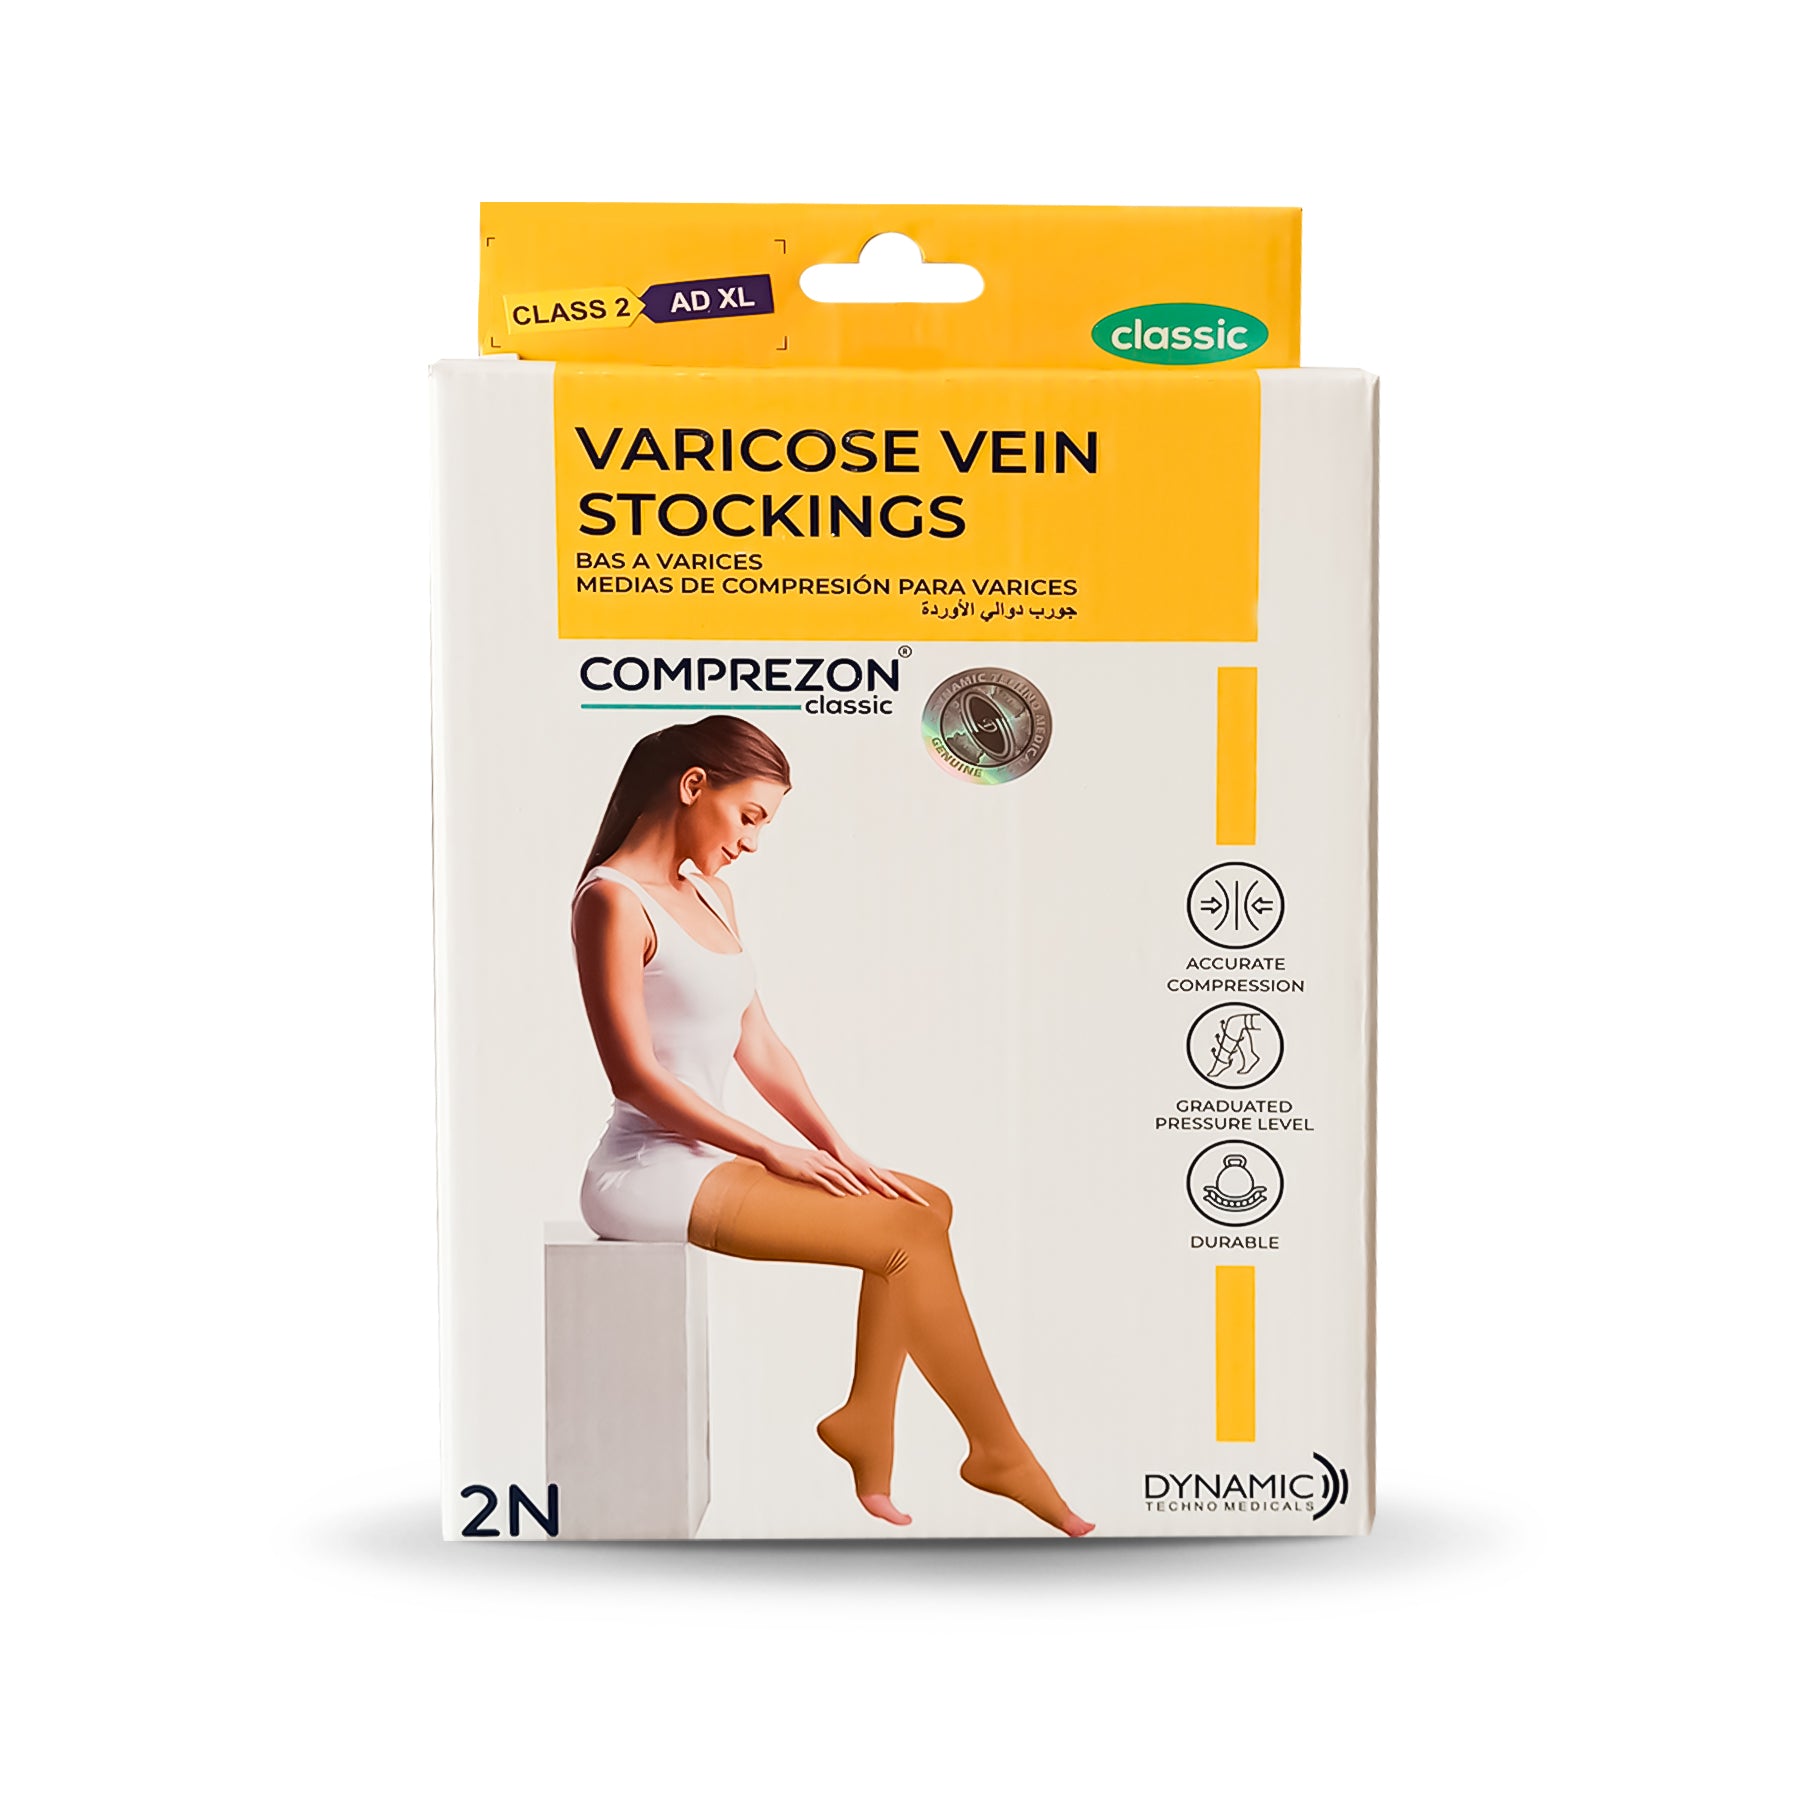 Dyna Comprezon Varicose Vein Stockings Class 2 Below Knee- 1 pair (Large) …